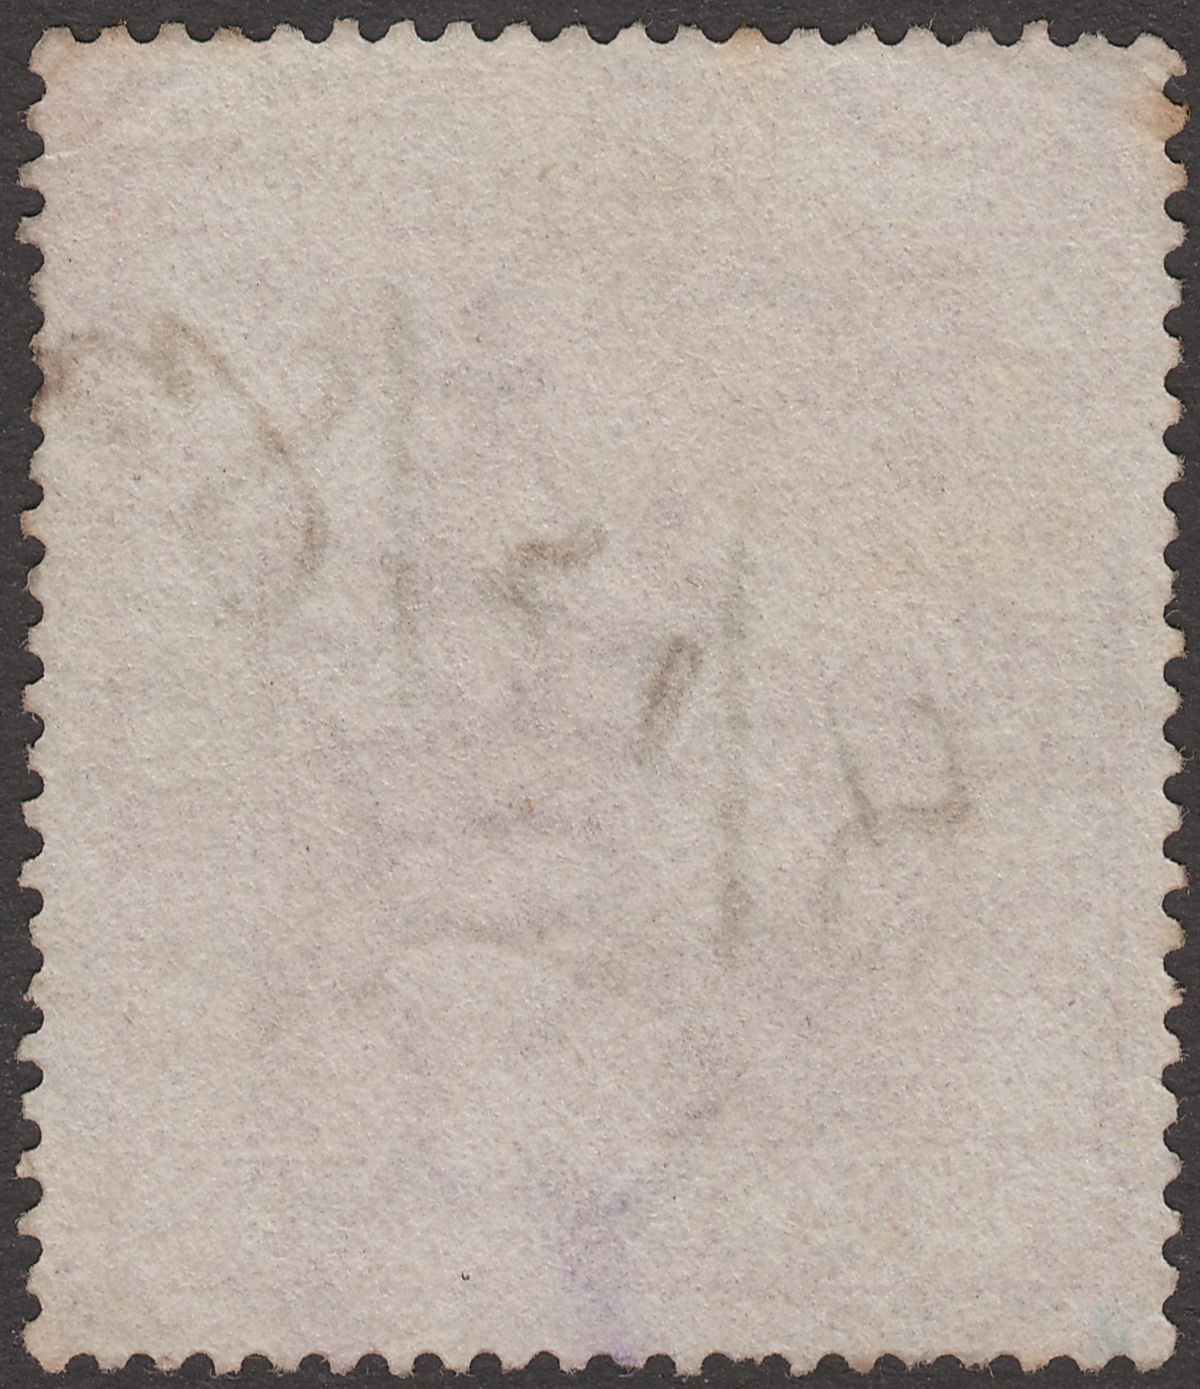 Hong Kong 1867 QV Revenue Stamp Duty $1.50 Purple Brown p14 Used Barefoot BF6B